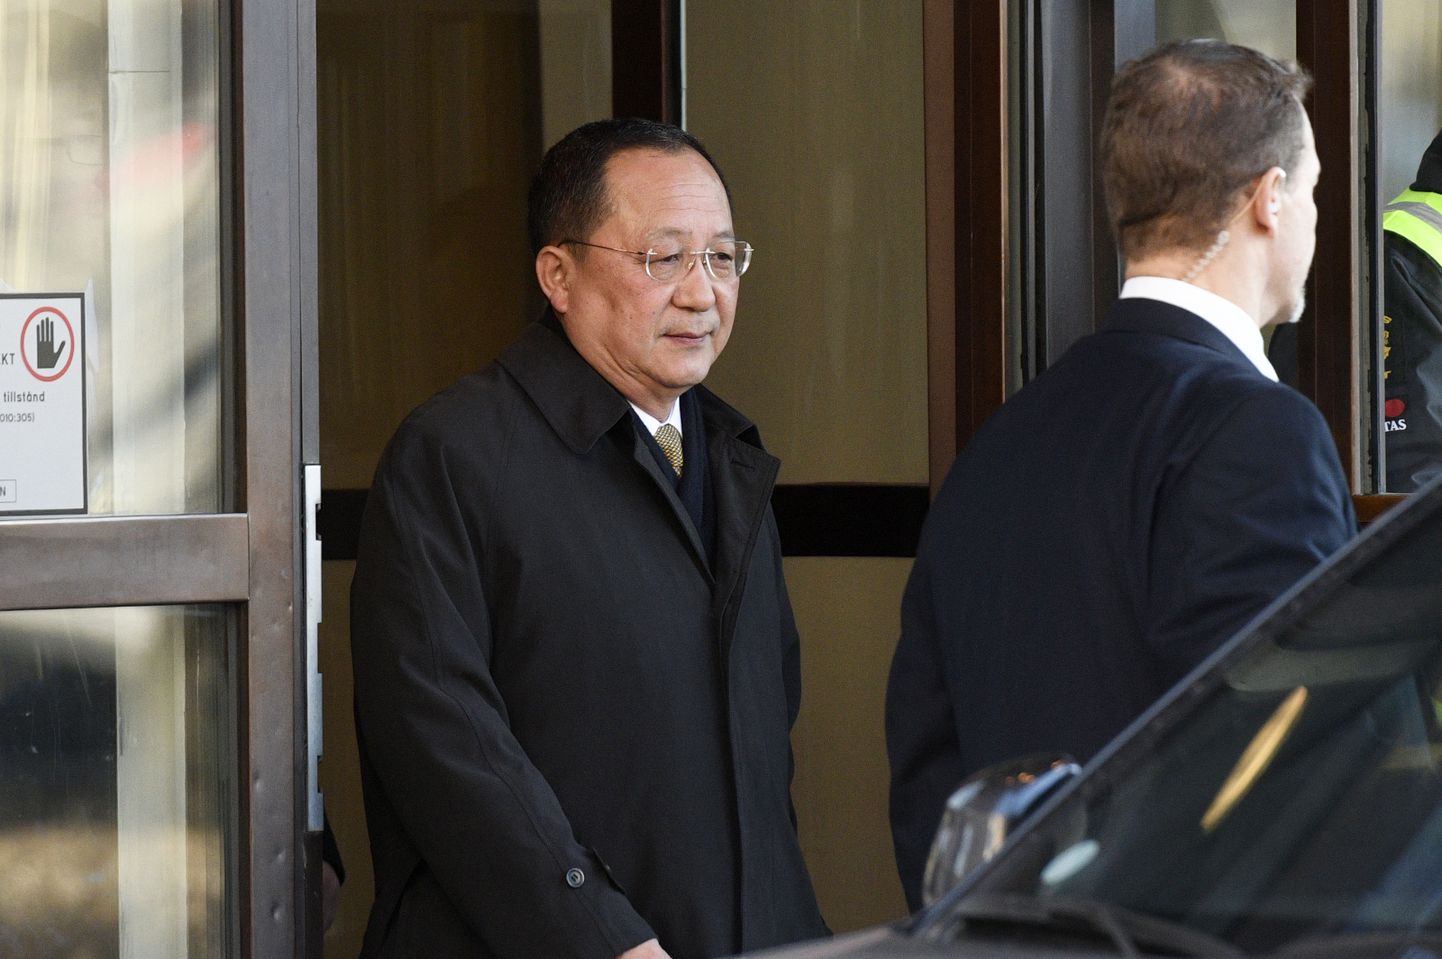 Põhja-Korea välisminister Ri Yong-ho Stockholmis.